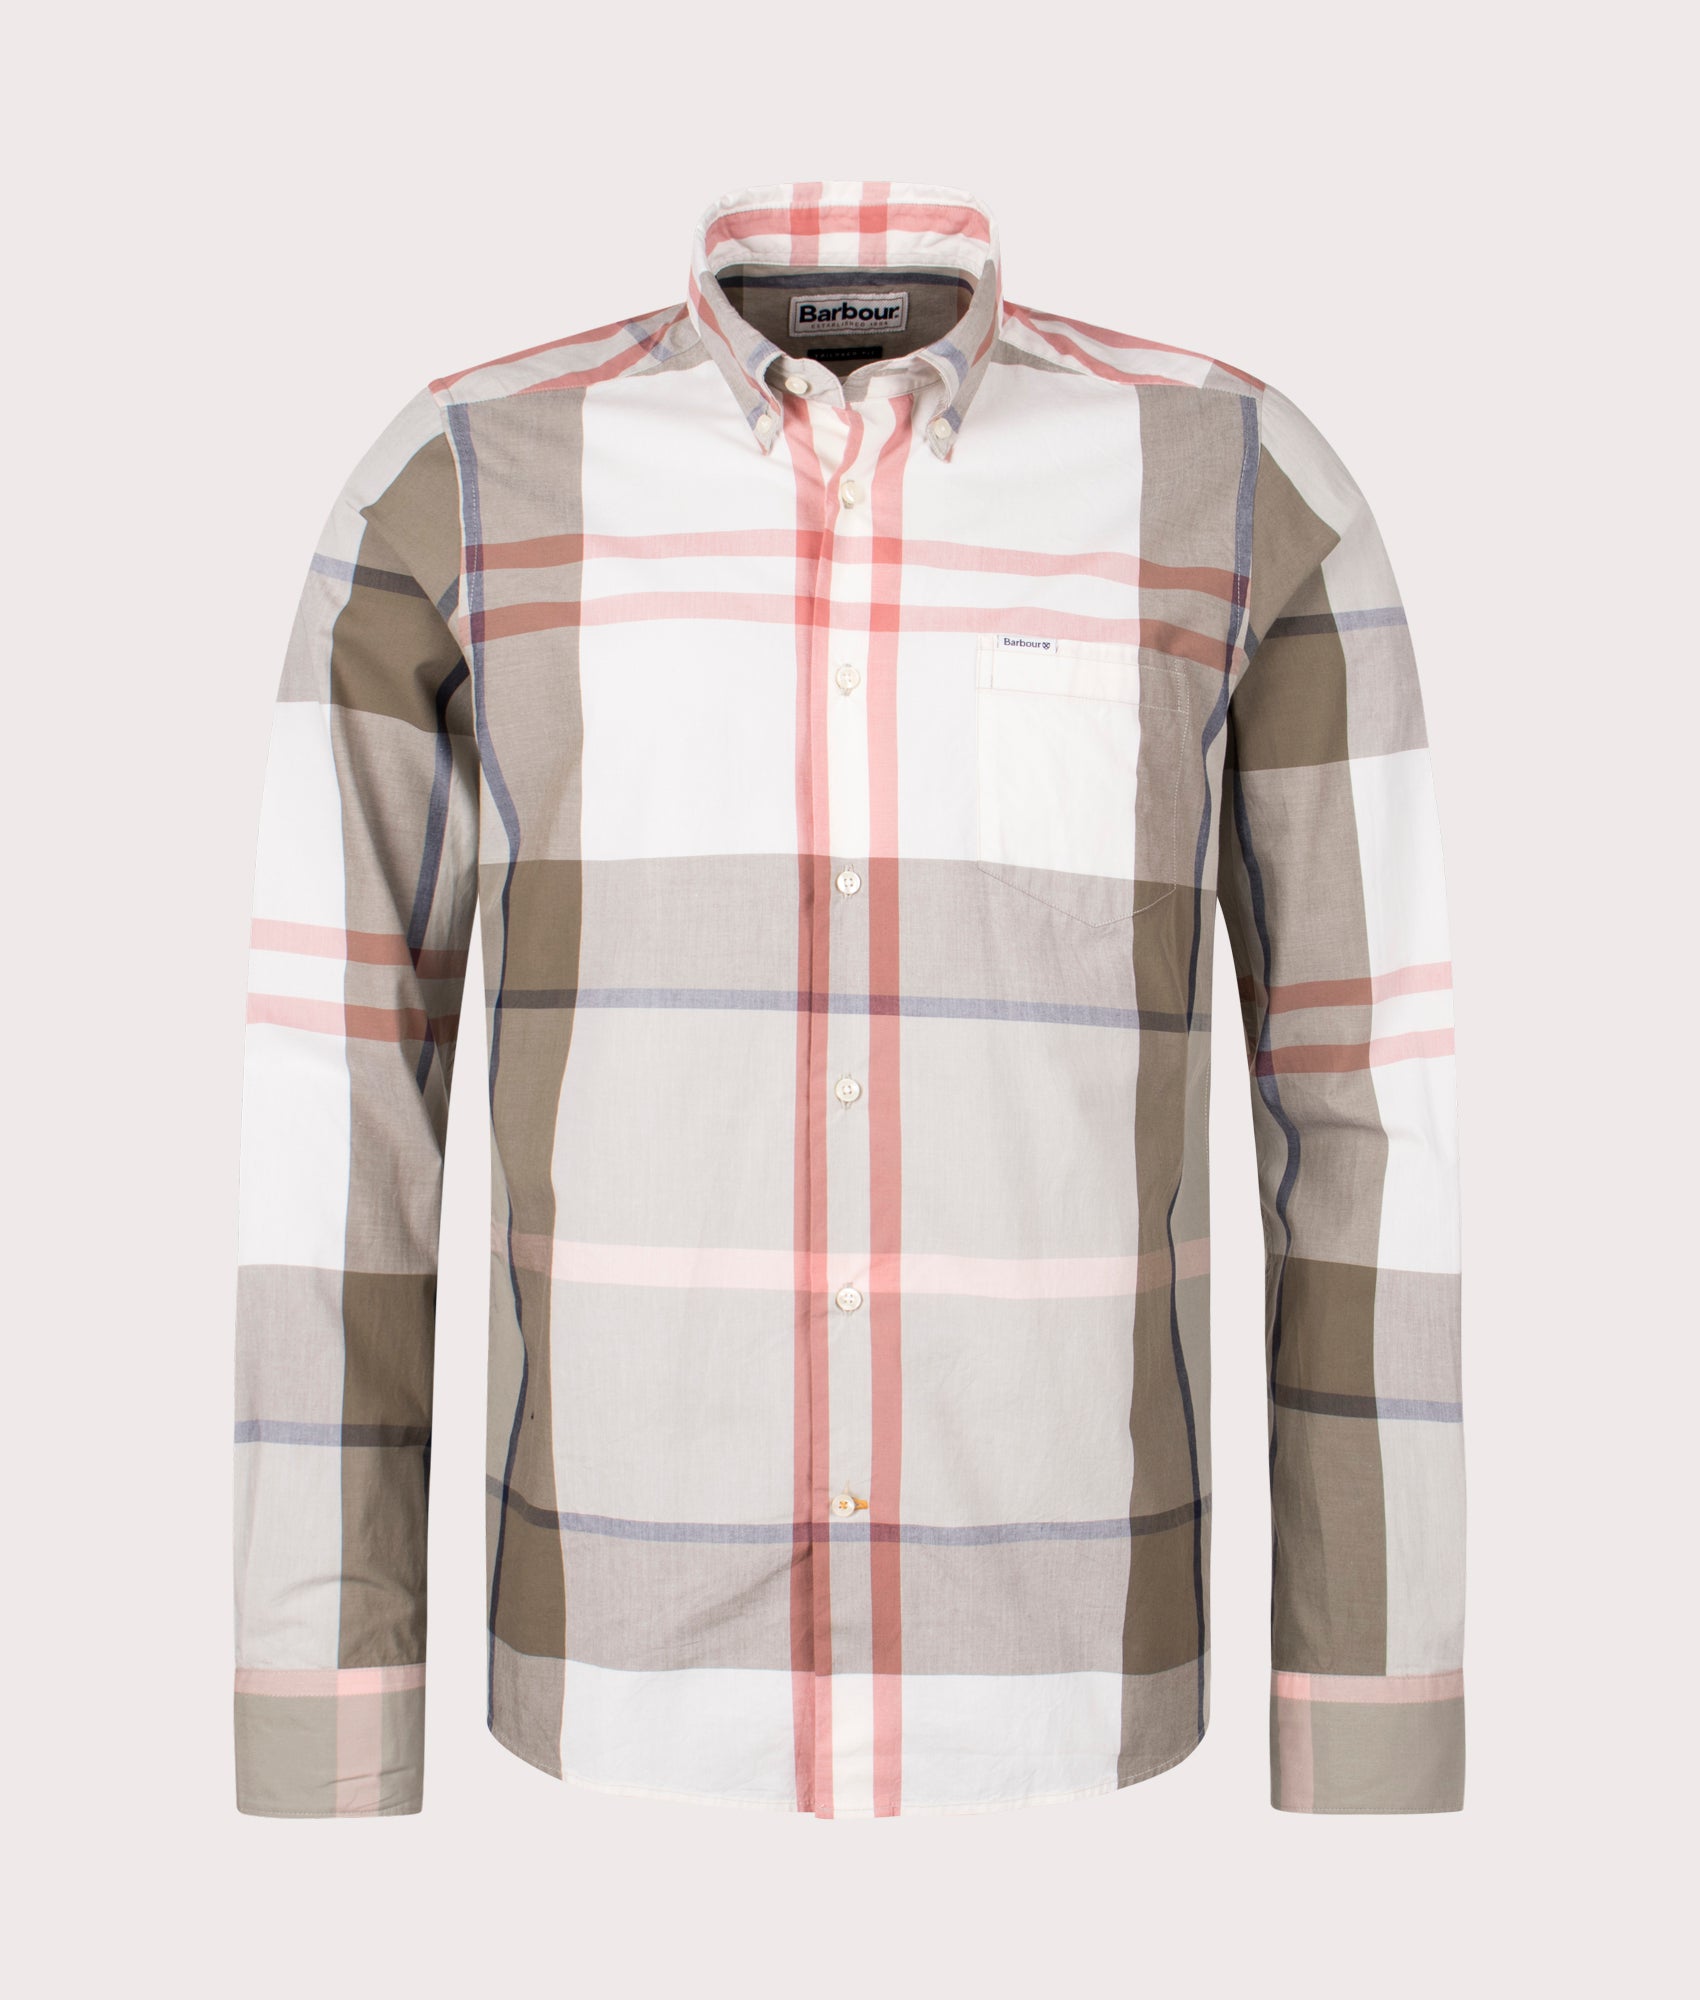 Barbour Lifestyle Mens Harris Shirt - Colour: TN24 Glenmore Olive Tartan - Size: Large